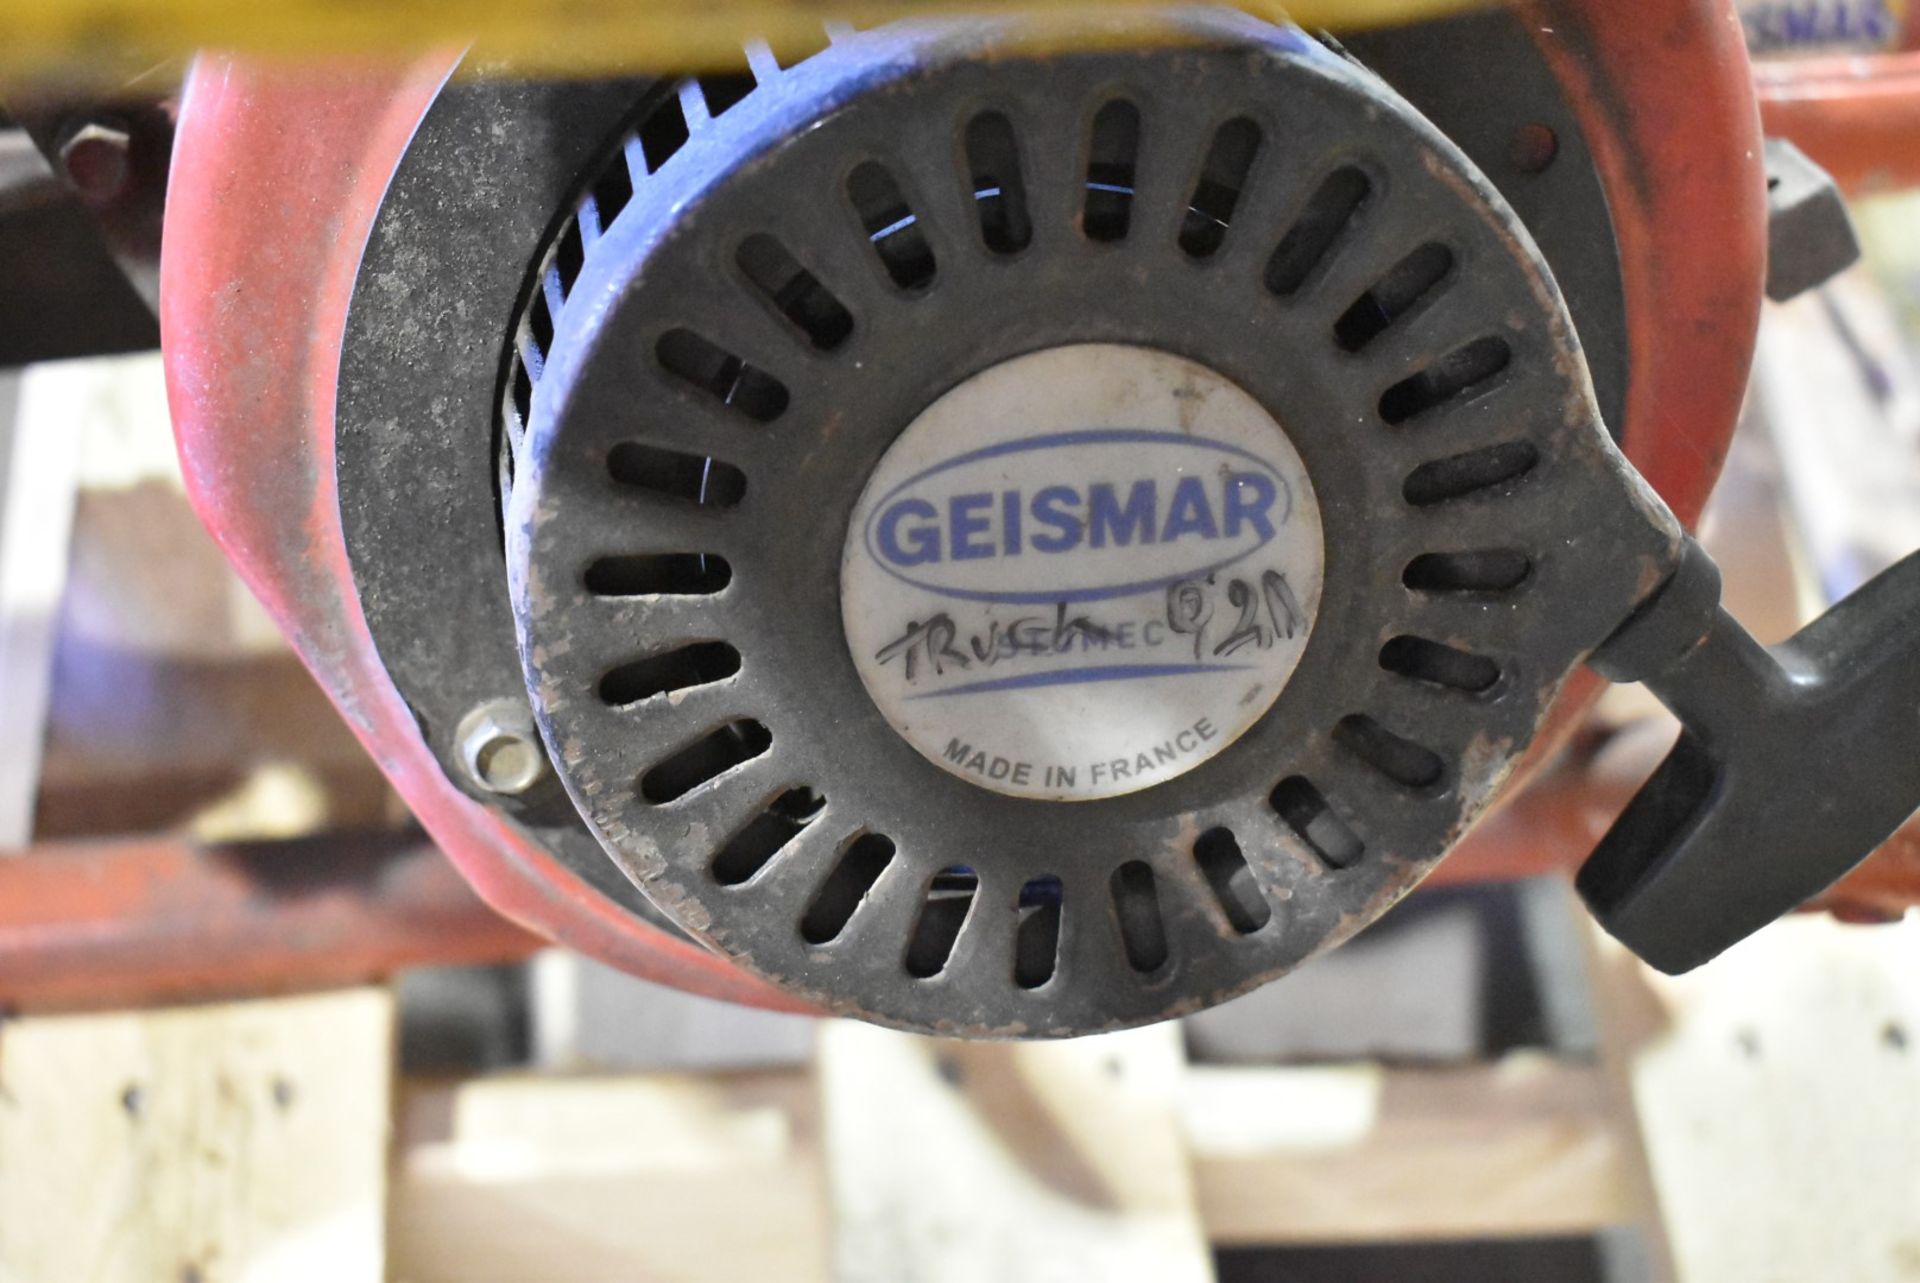 GEISMAR STUMEC (2011) MP.12 6" GAS-POWERED RAIL GRINDER WITH SPEEDS TO 3800 RPM, S/N: 05-29815 - Image 3 of 5